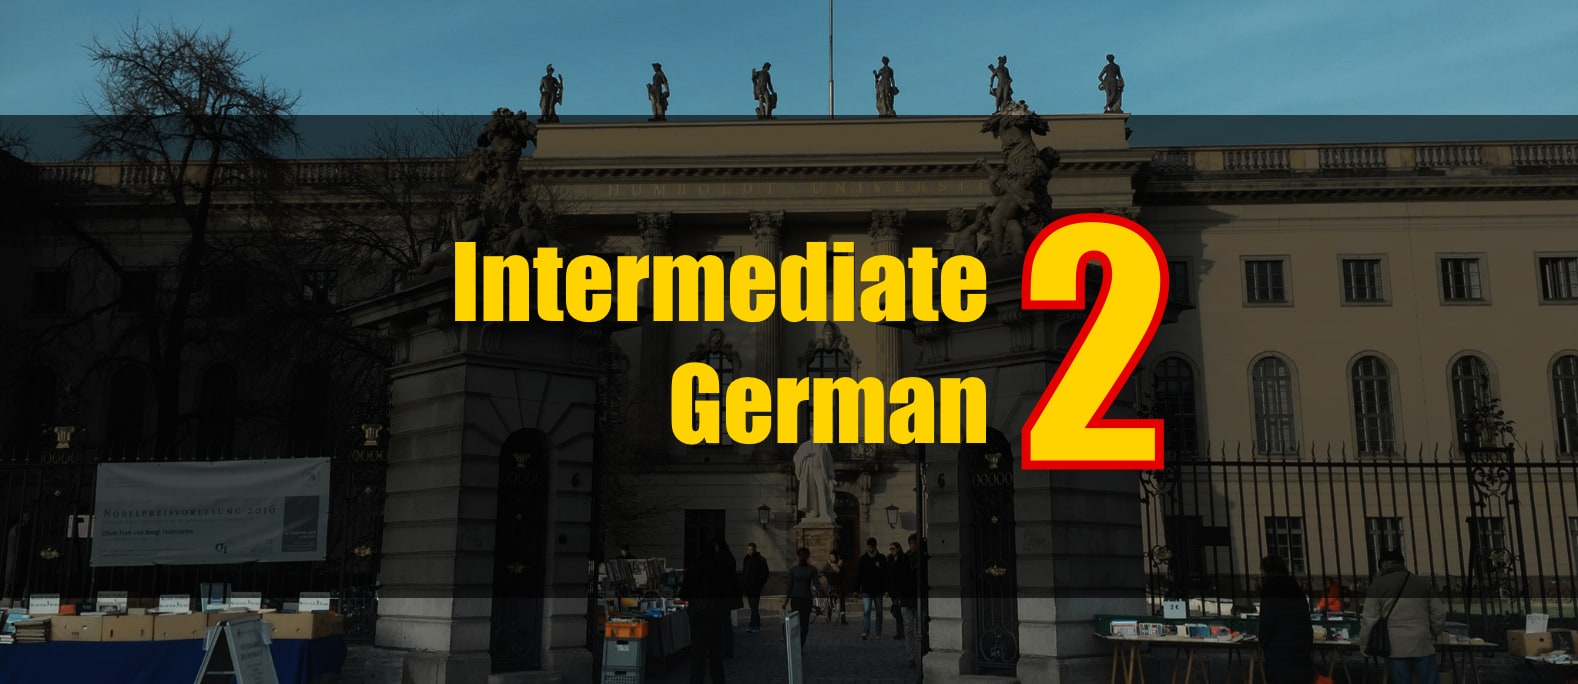 Intermediate German 2